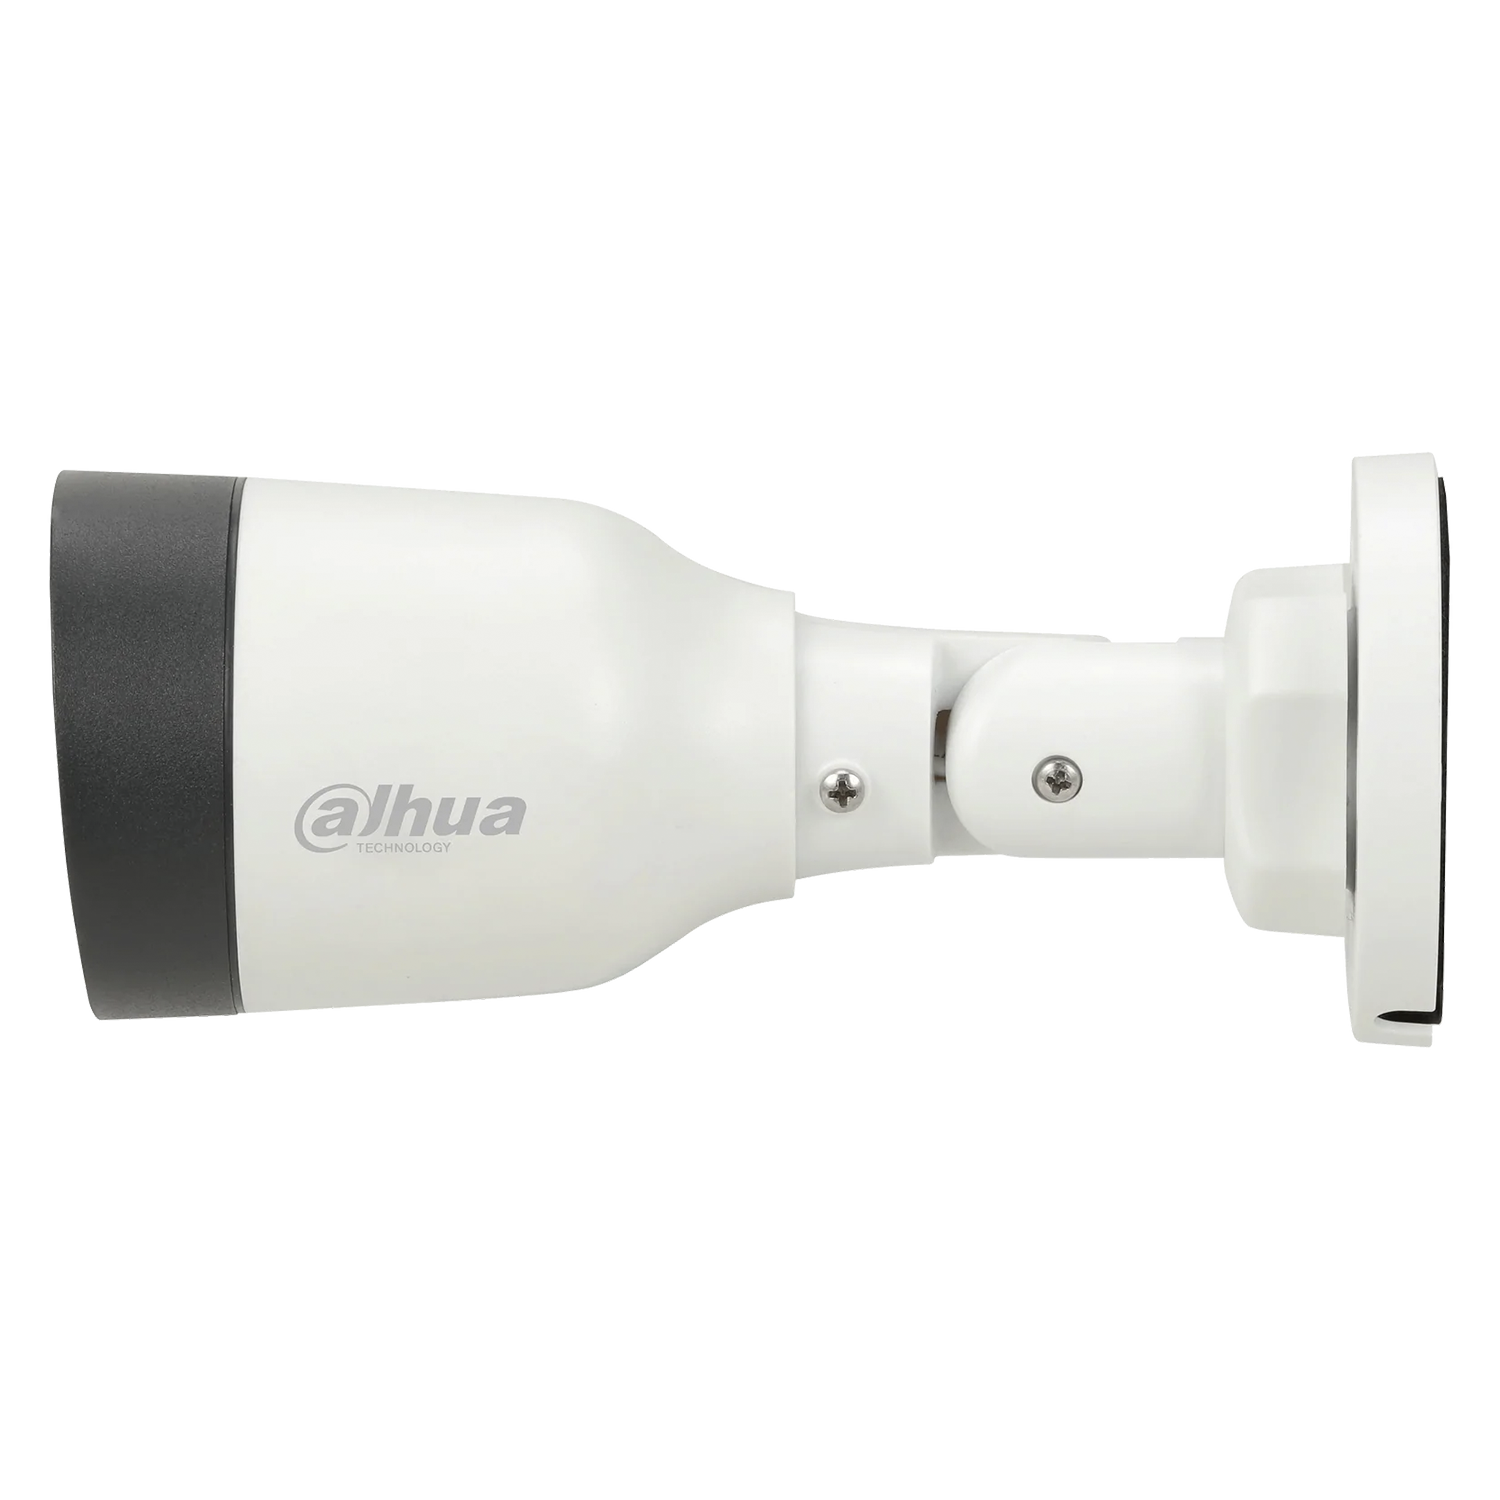 Câmera de Segurança Dahua Bullet HFW1230S1-S Full HD 2MP - Branco